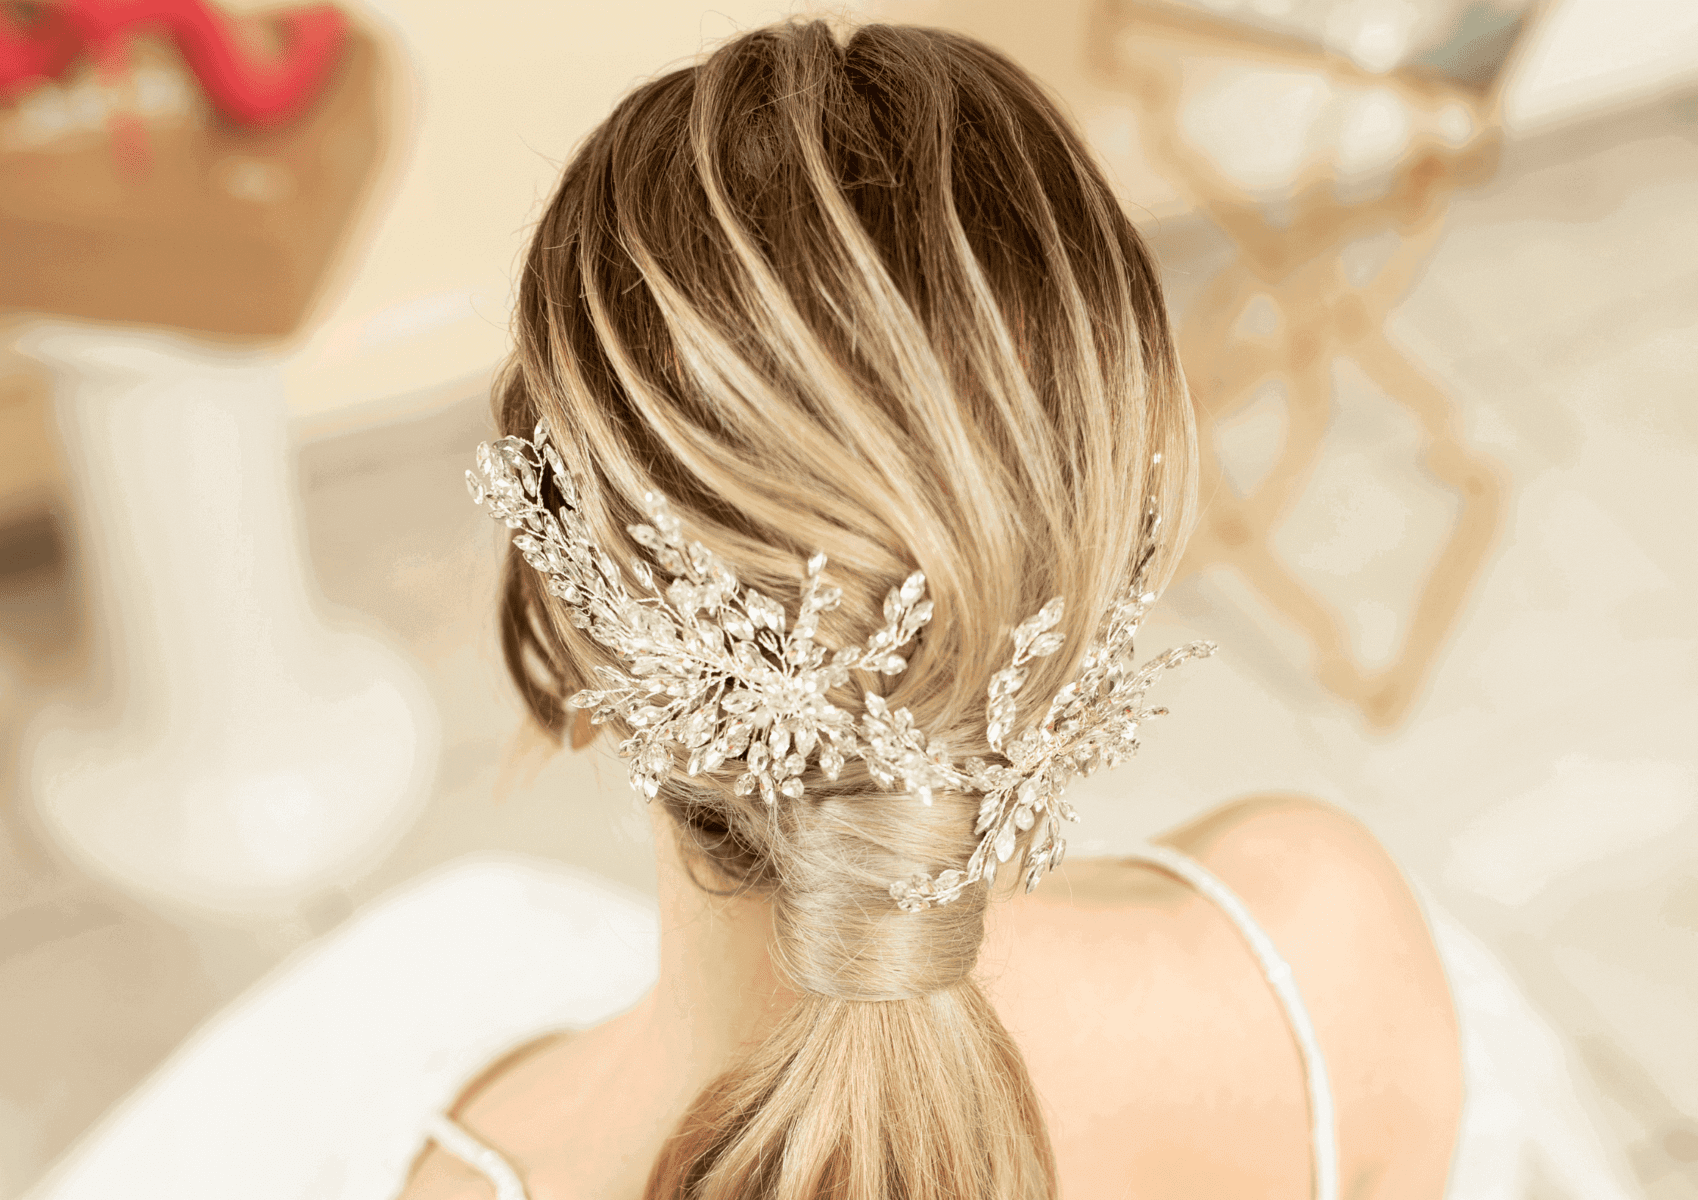 Leaf Hair Piece Gold Bridal Pearl Headband 9246 Trouwen Accessoires Haaraccessoires Kransen & Tiaras NEW Gold Rhinestone Bridal Tiara Gold Hair Accessory 